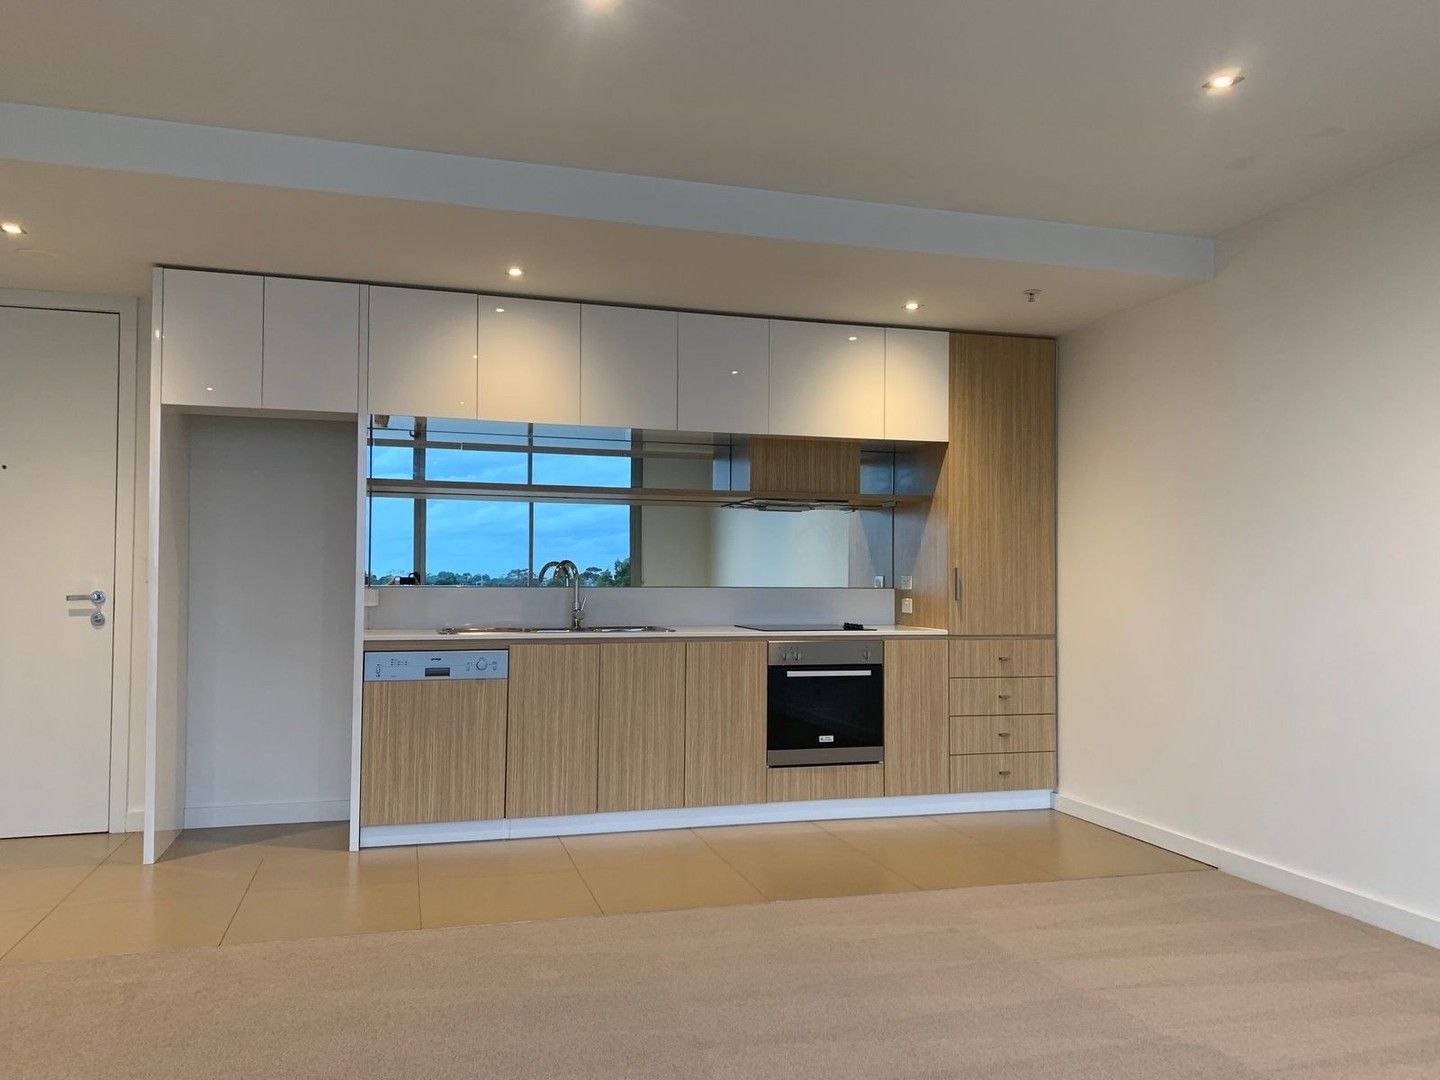 2 bedrooms Apartment / Unit / Flat in 58/48 Eucalyptus Dr MAIDSTONE VIC, 3012